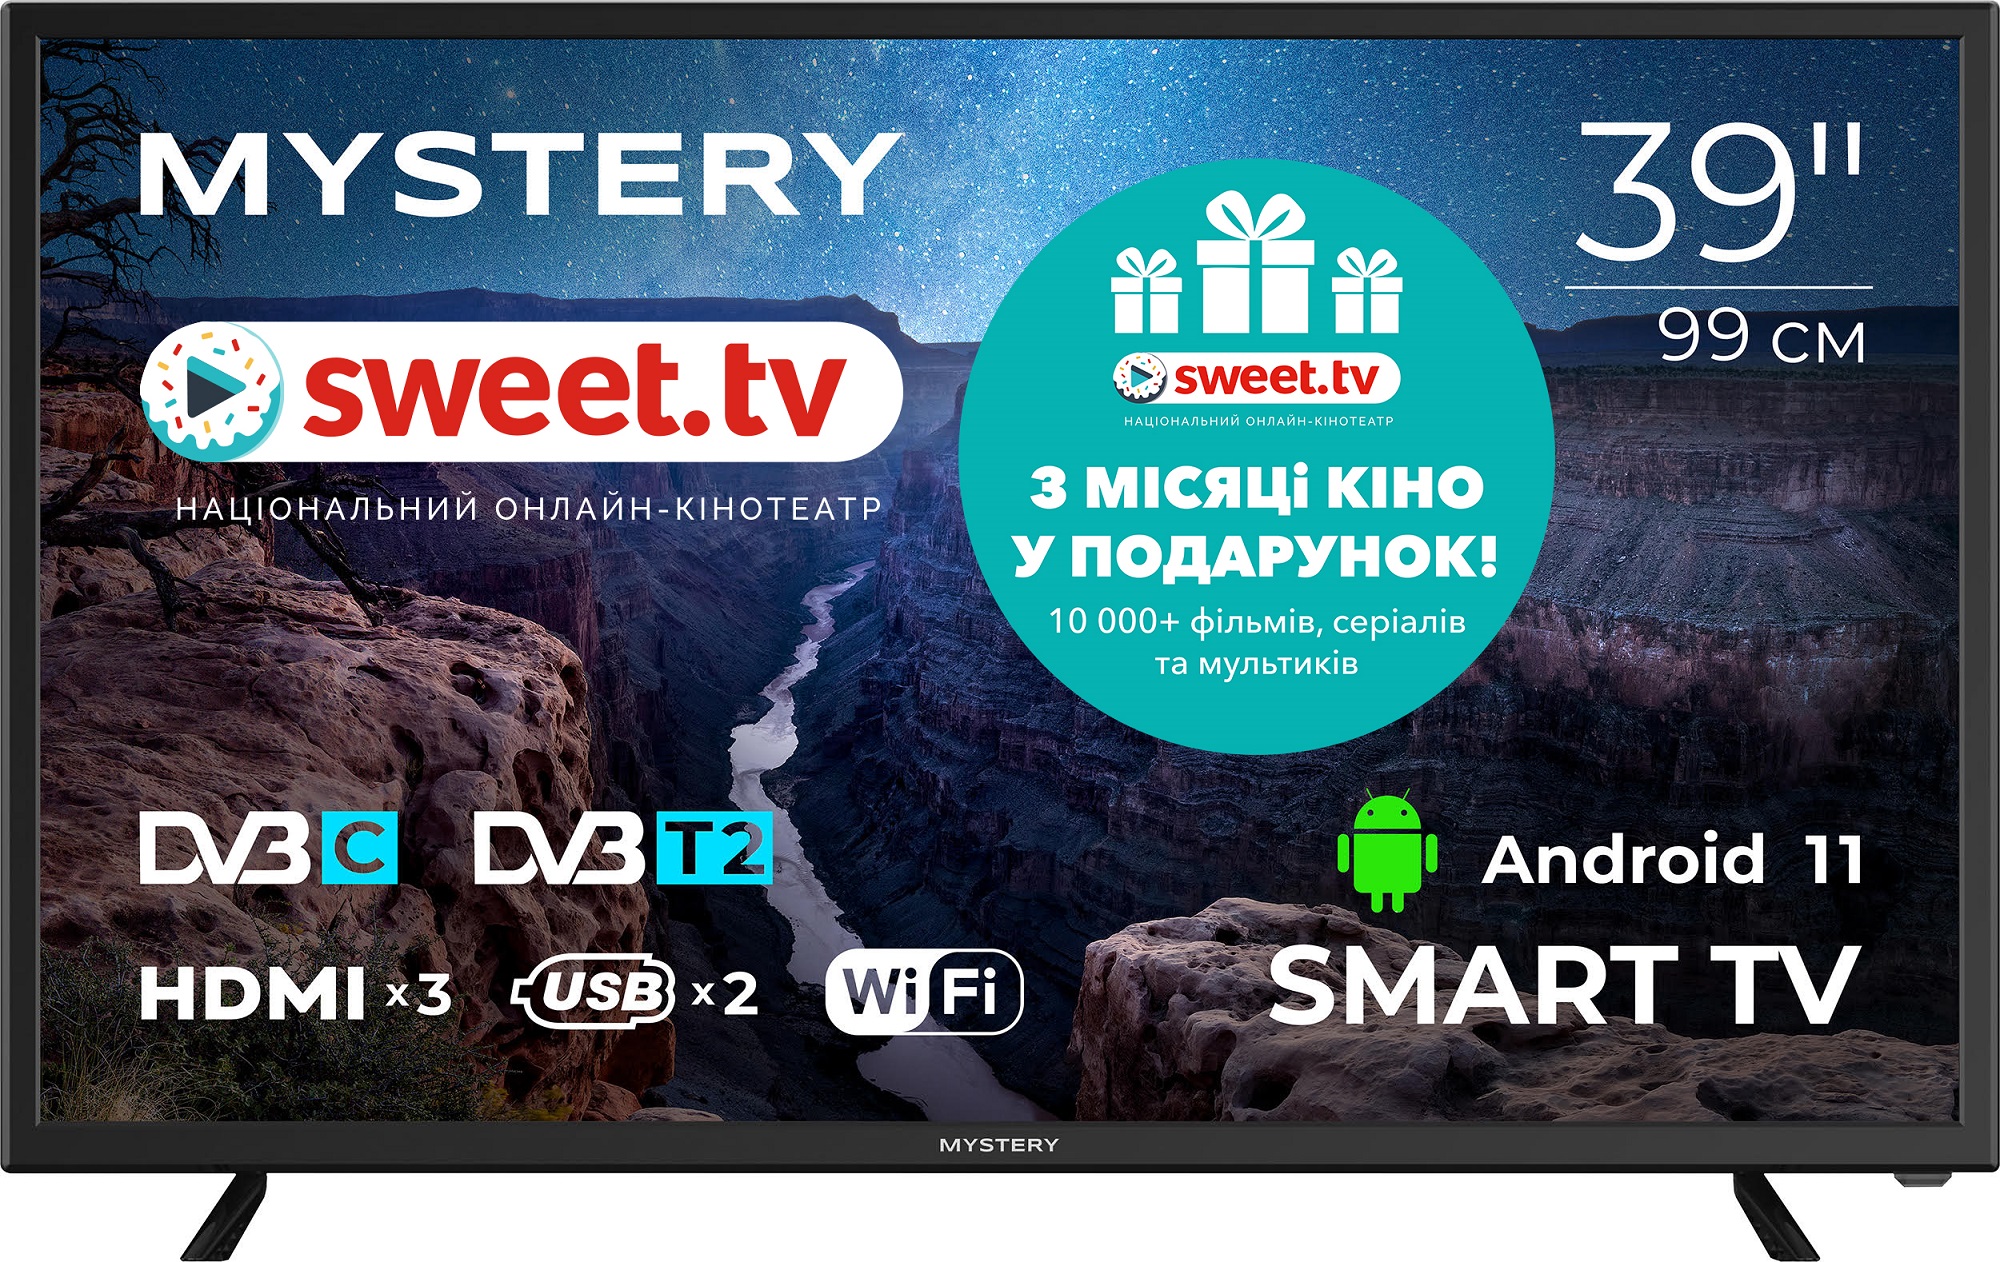 Smart-телевизор Mystery MTV-4055HST2